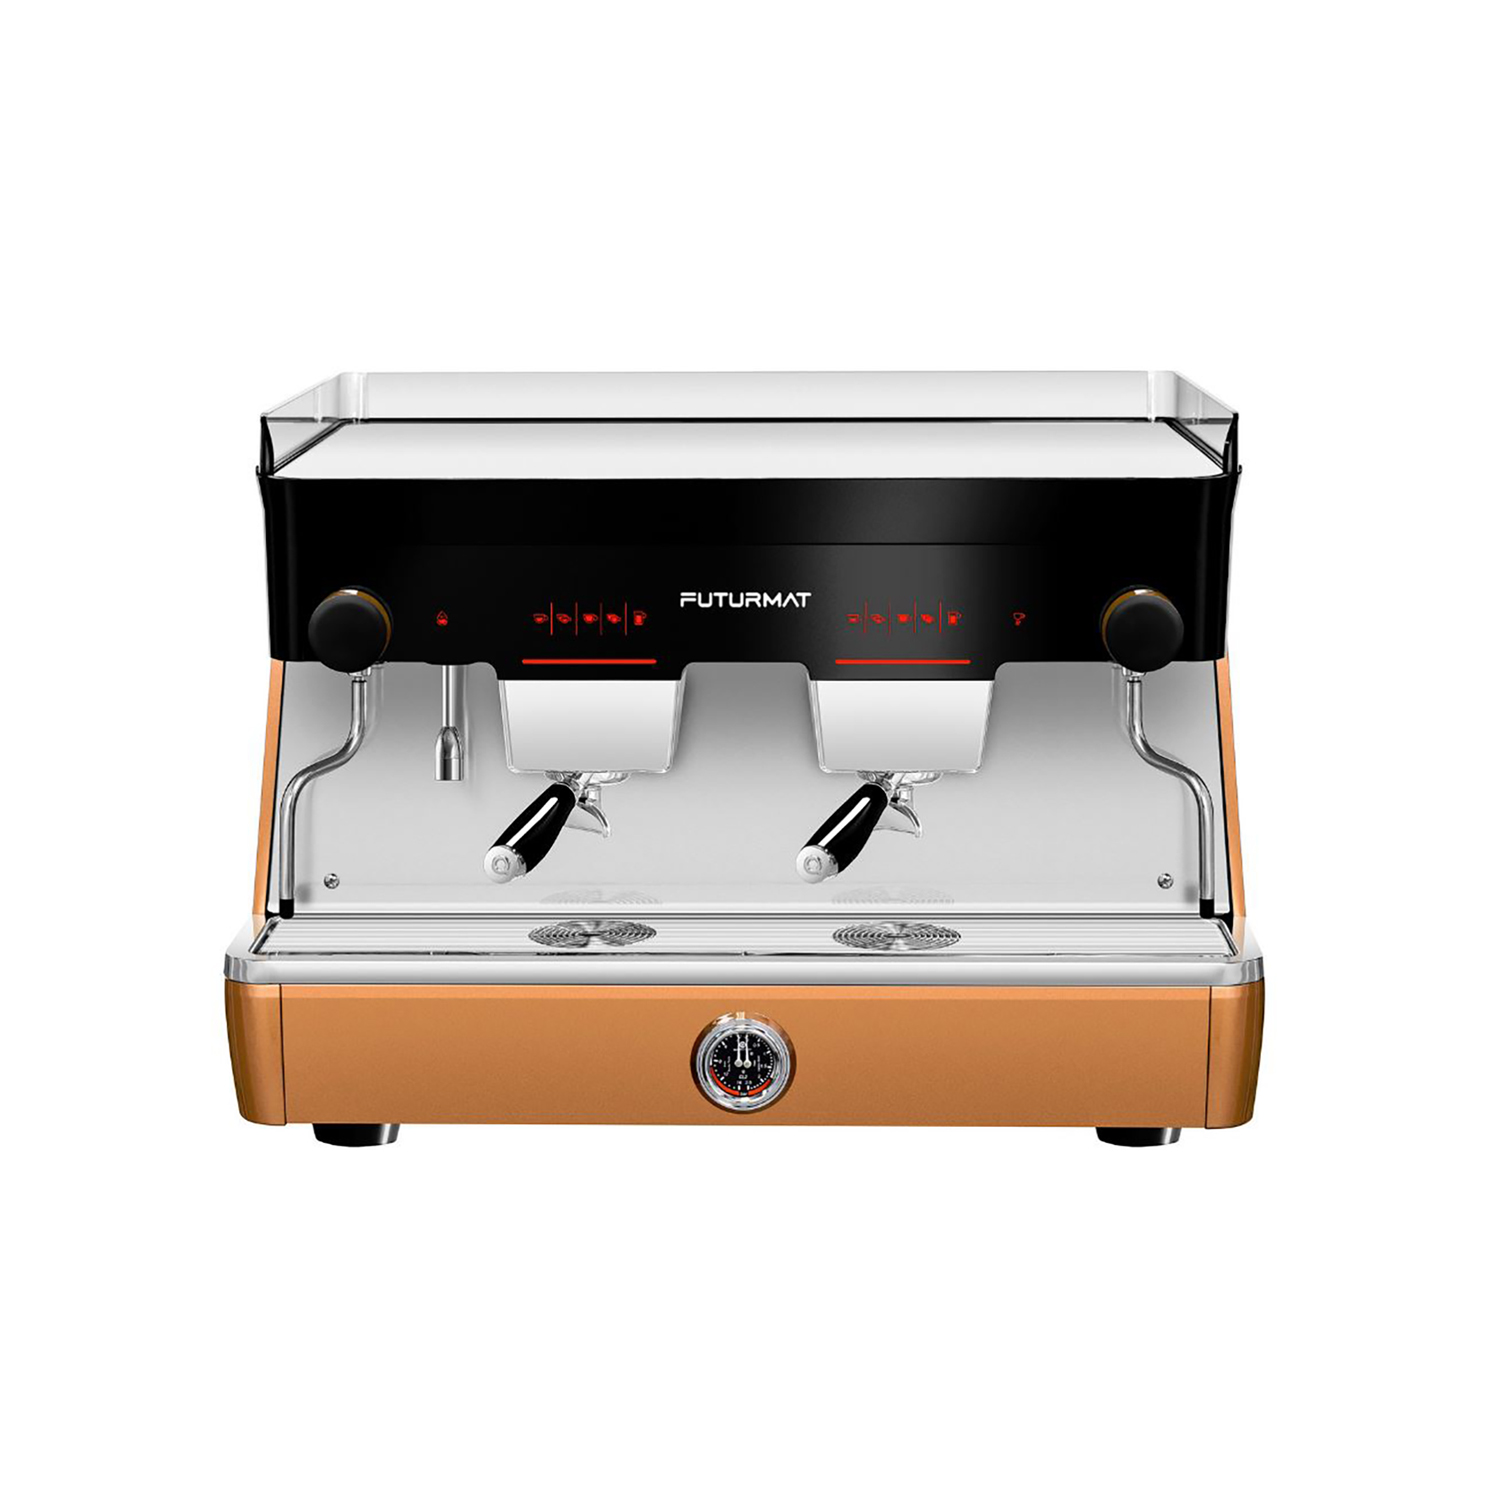 Industrial design and engineering for Quality Espresso coffee machine: Futurmat F3